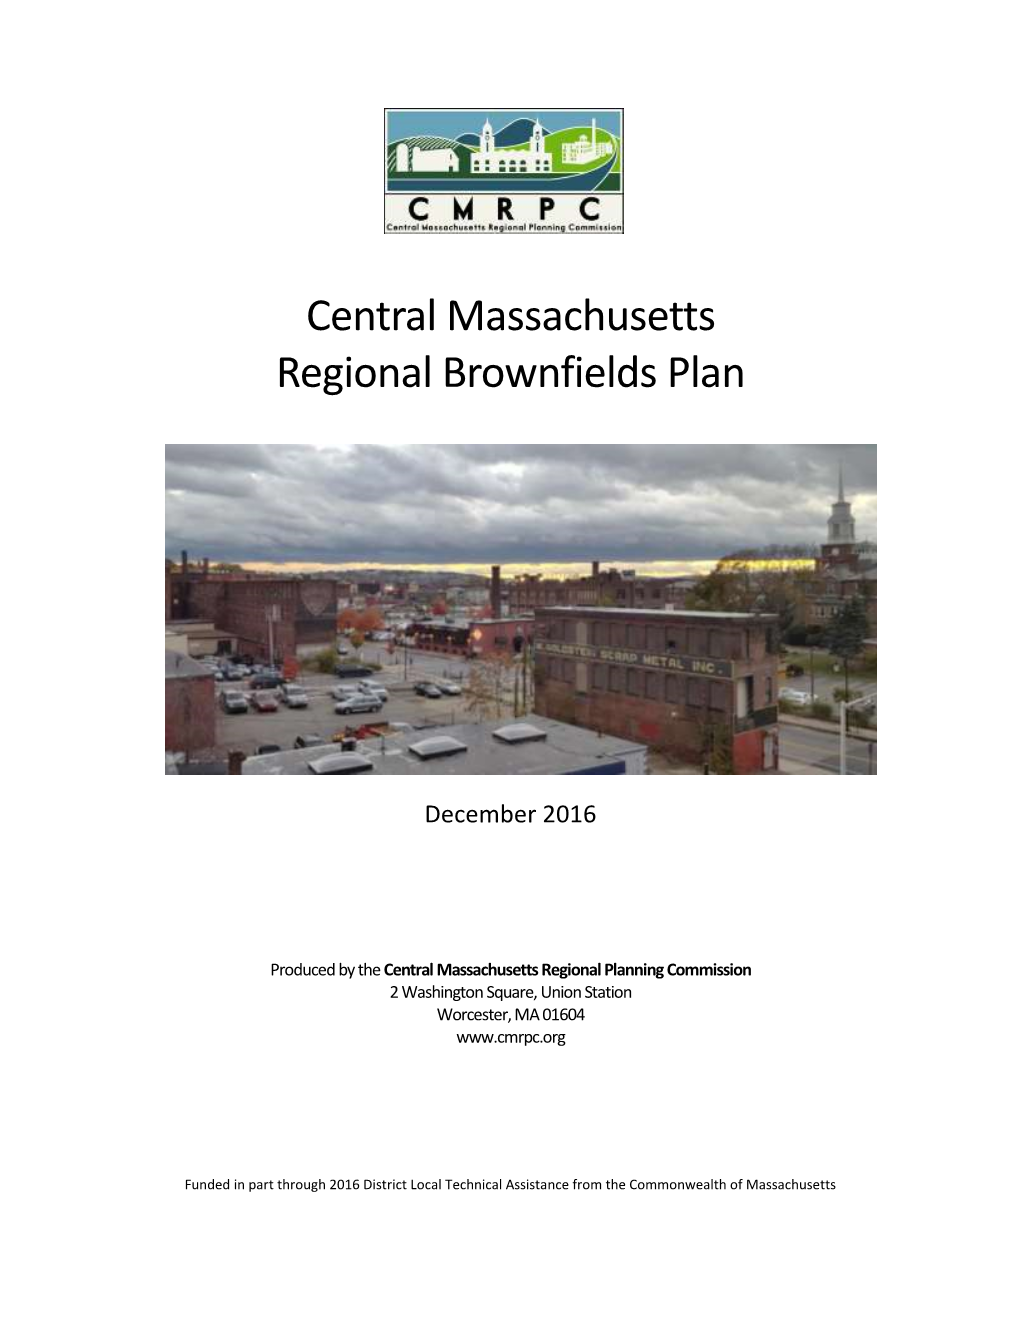 Central Massachusetts Regional Brownfields Plan